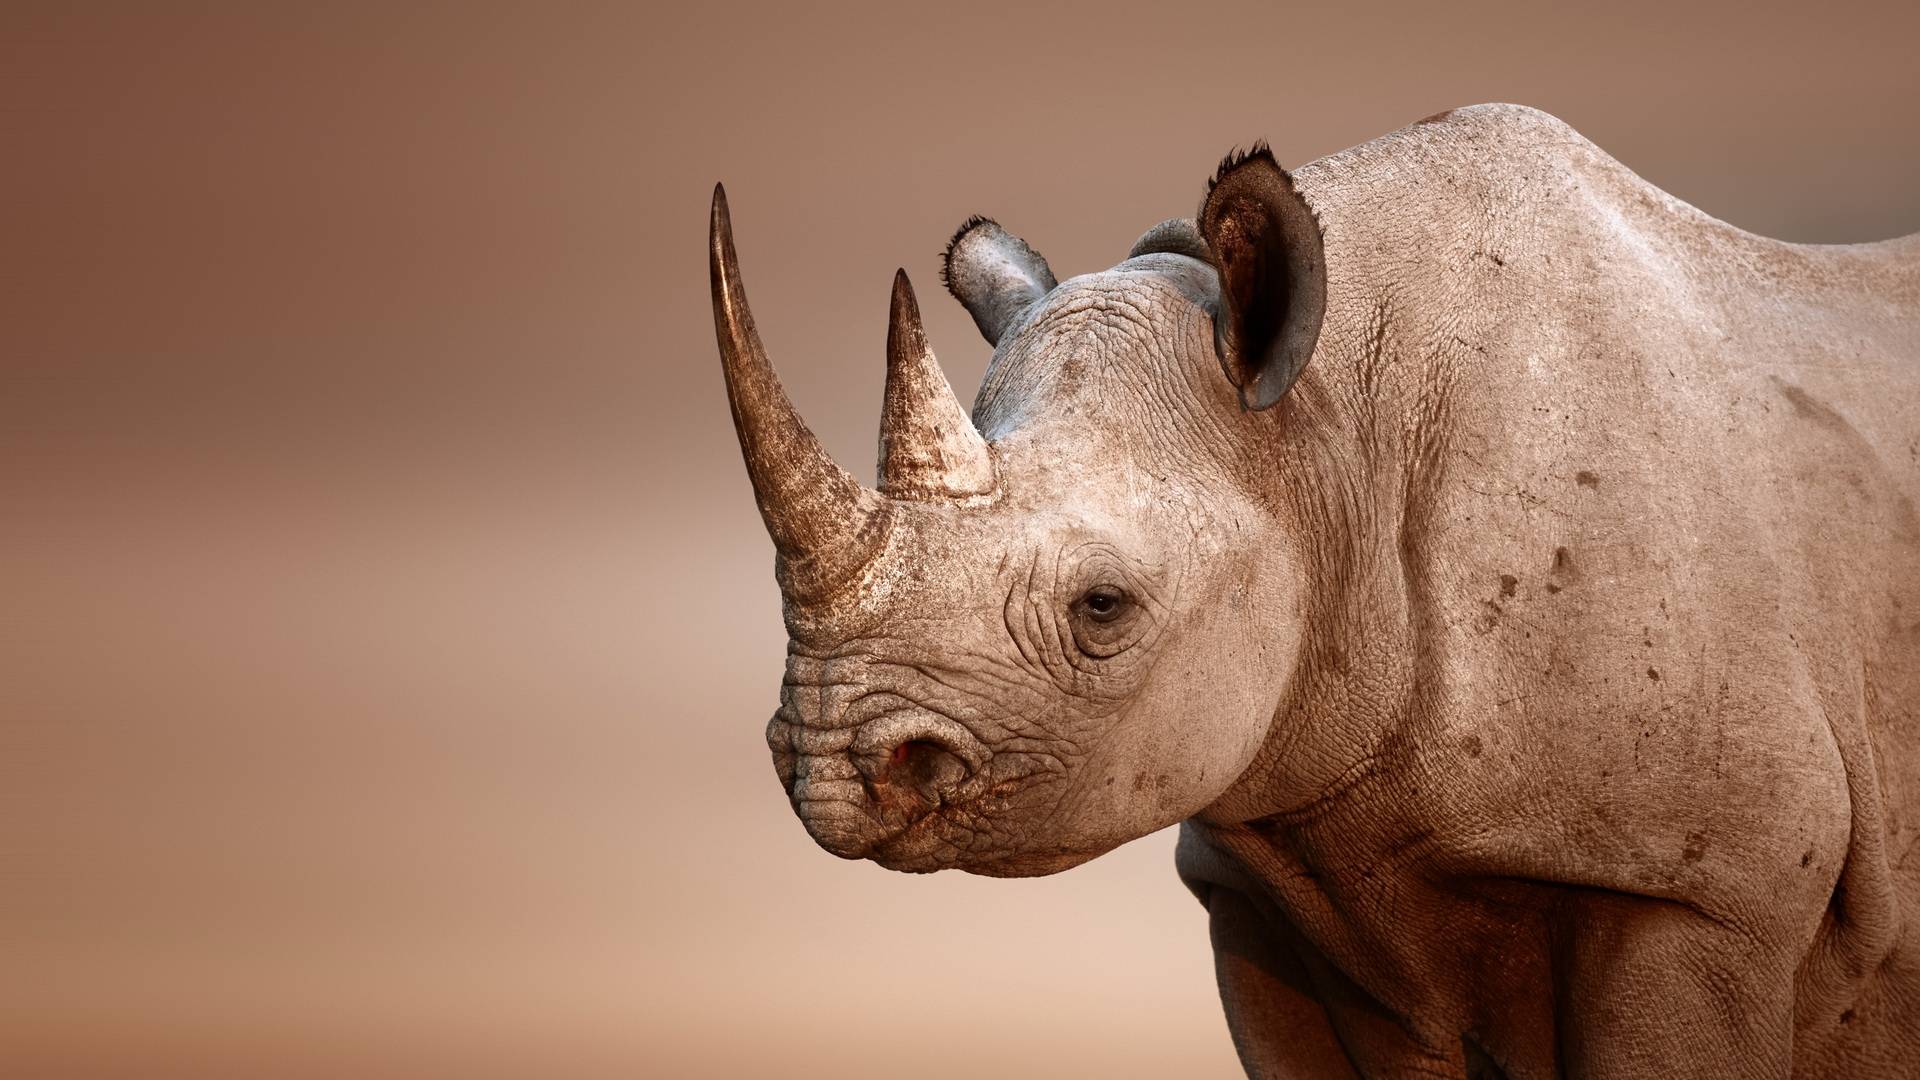 Rhino Wallpaper HD Download